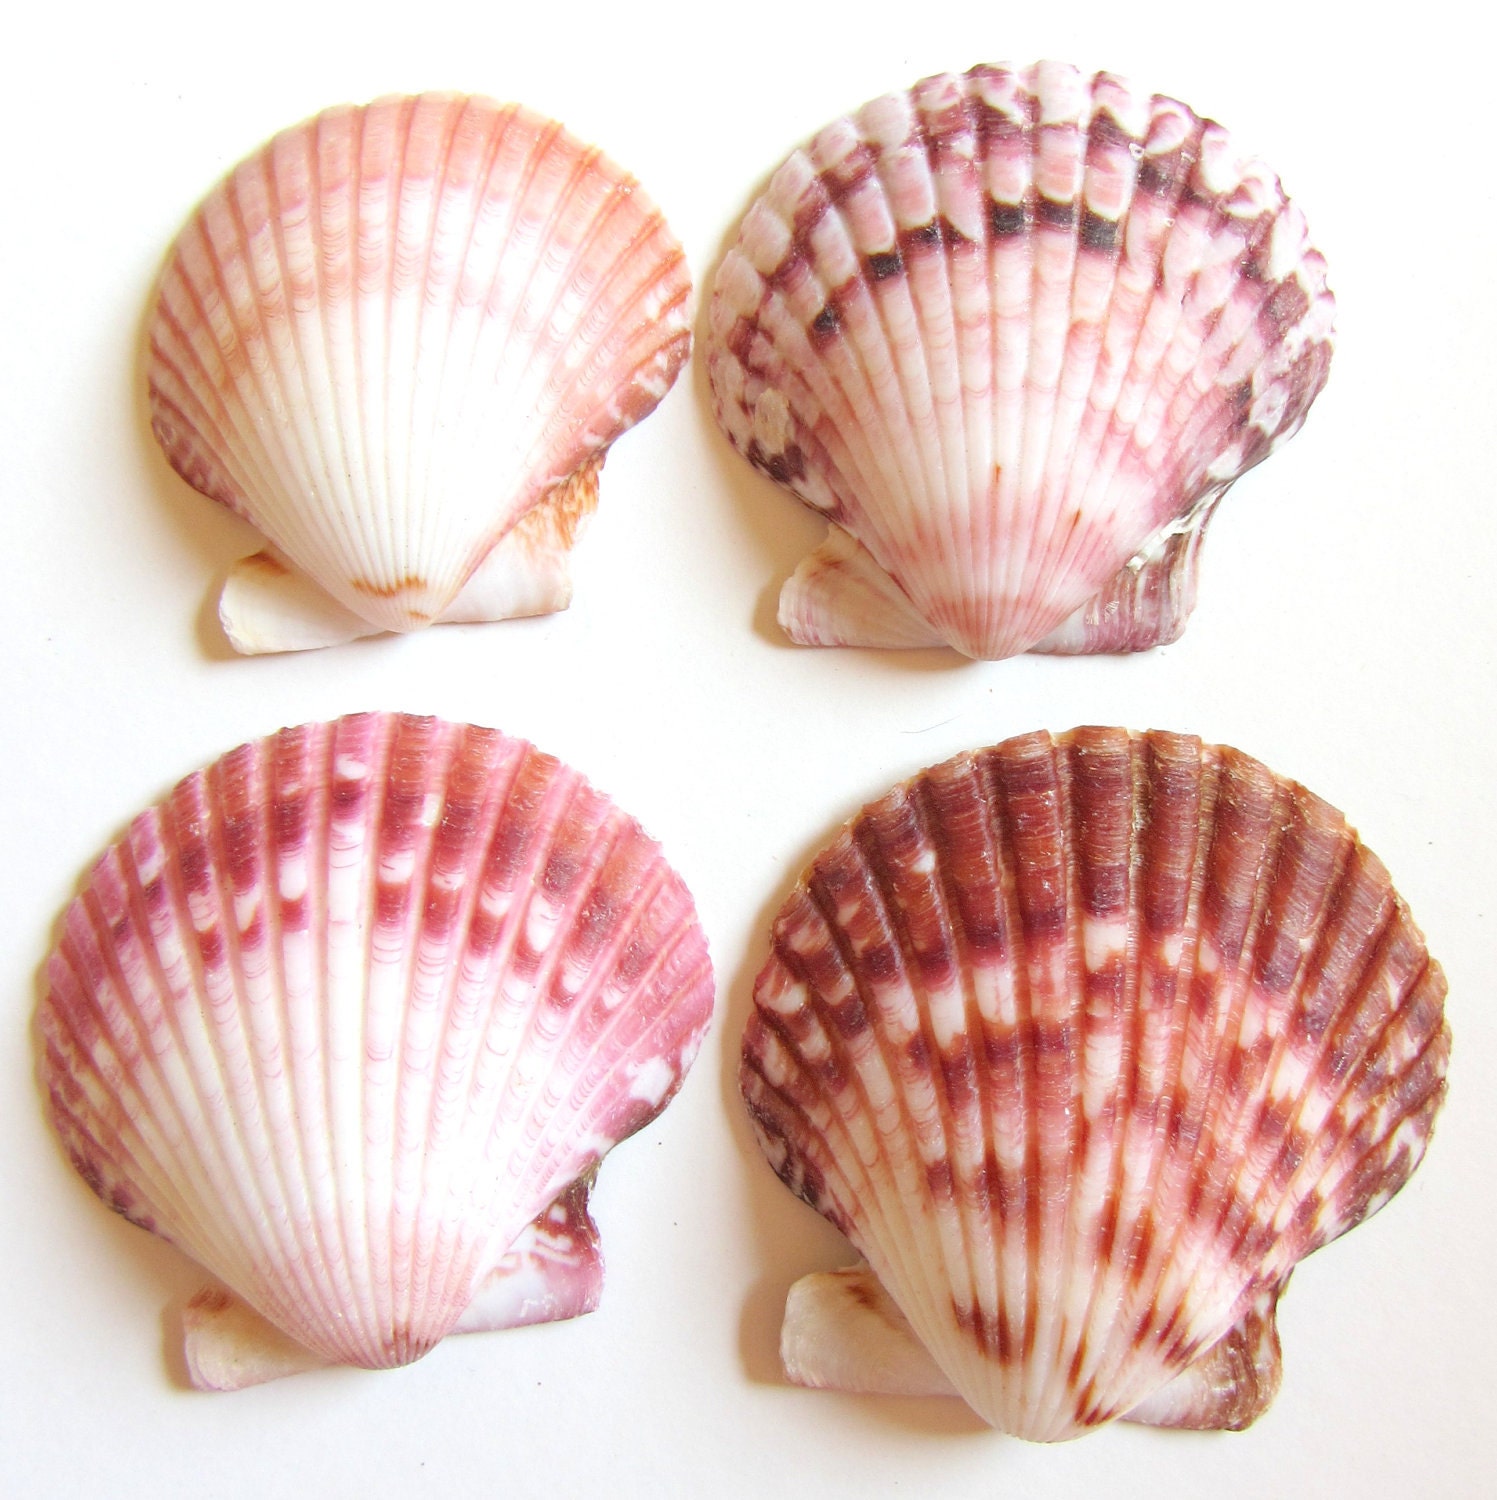 Beach Decor - Seashells - Rose Lions Paw Shells for Beach Decor, Beach Weddings or Crafts - 4 pc.